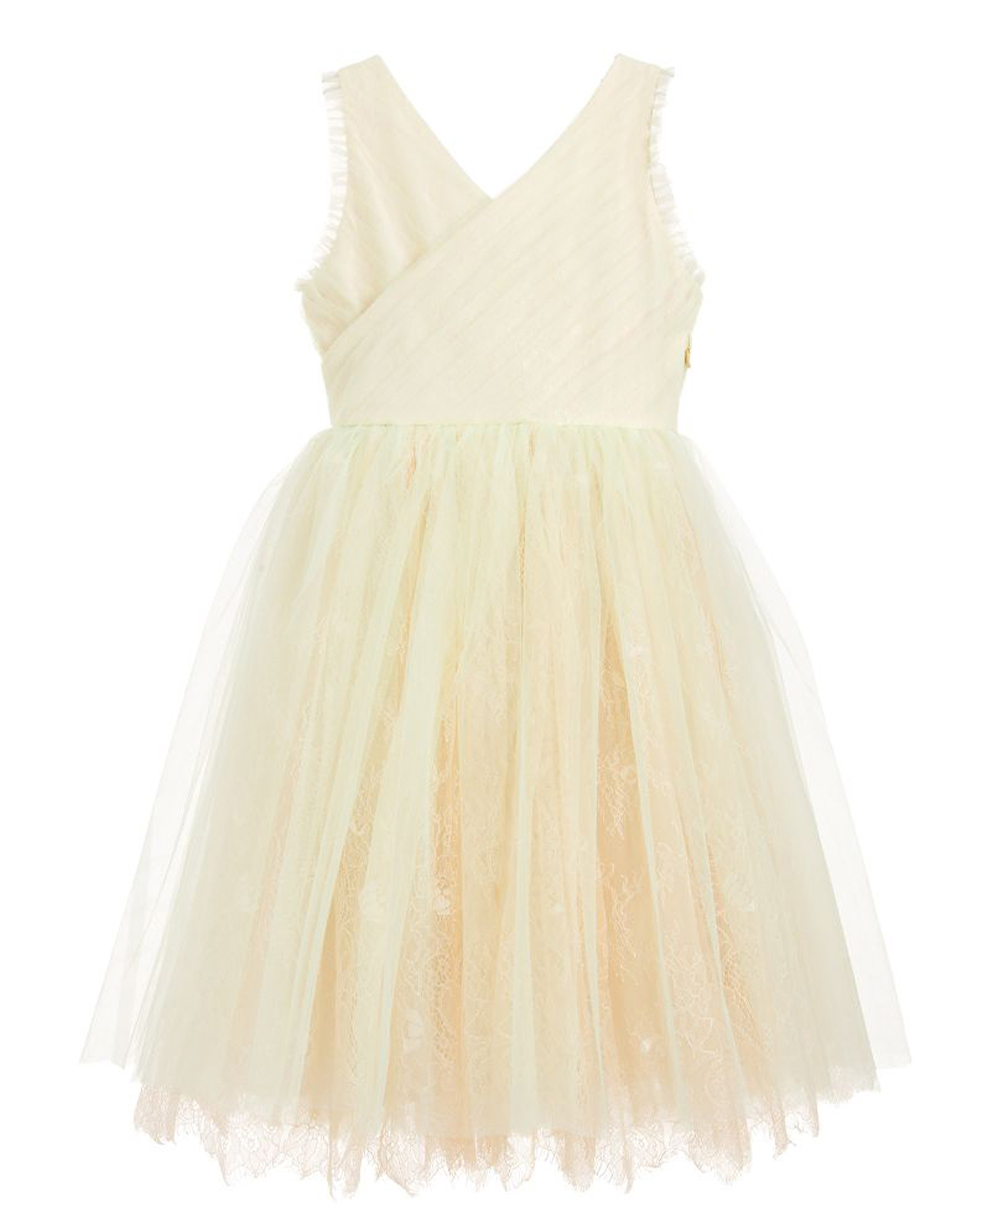 Green Tulle & Beige Lace Dress  Sleeveless  Princess Dress